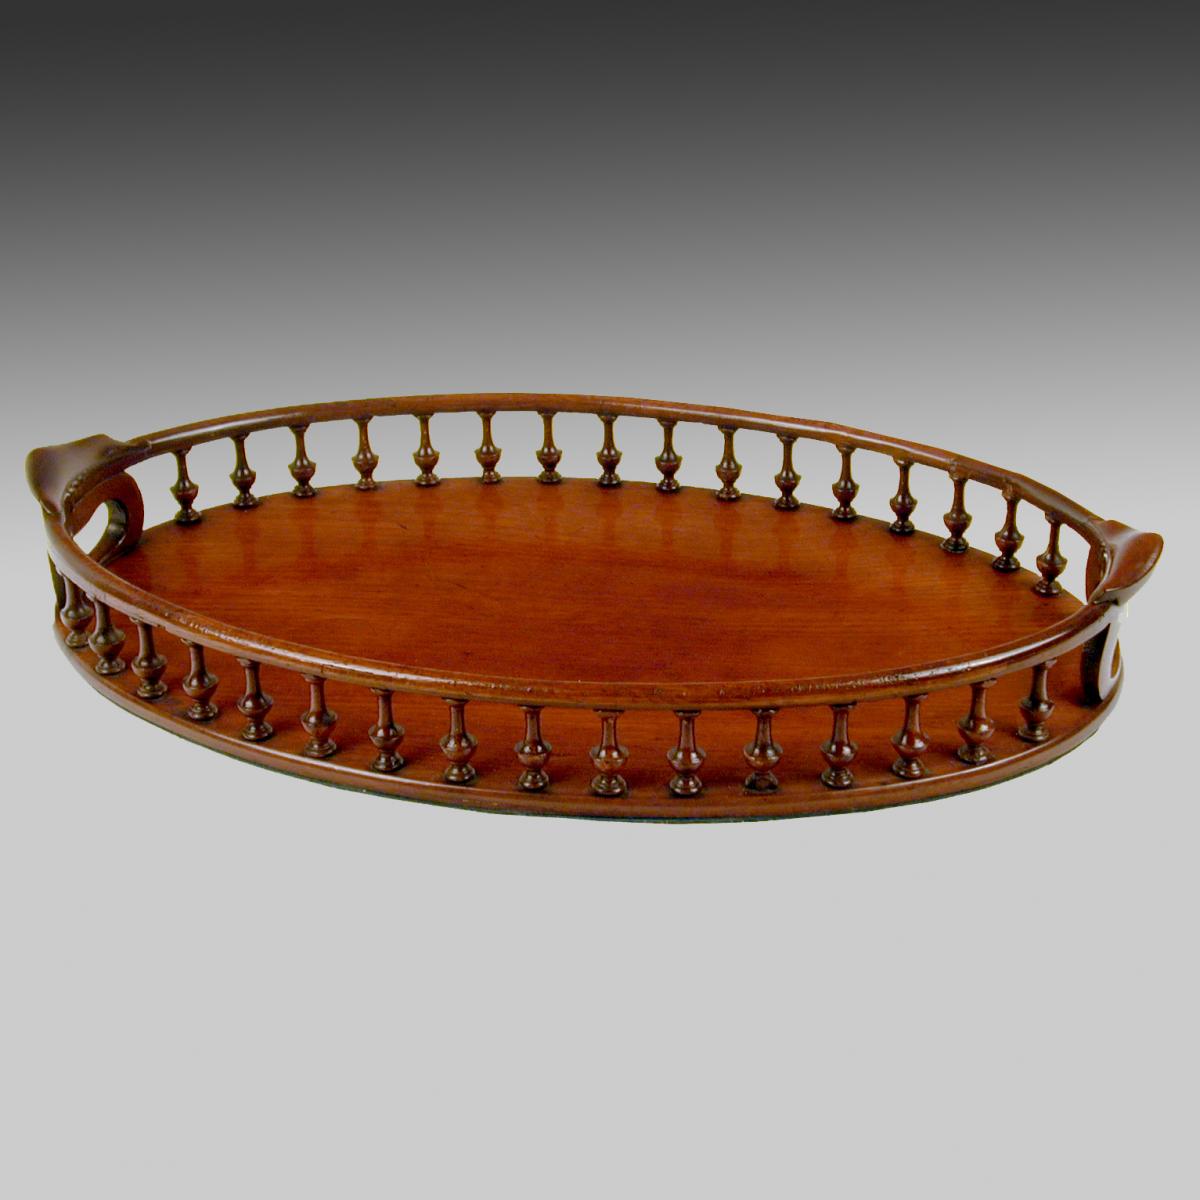 Very fine antique Georgian mahogany galleried oval tray